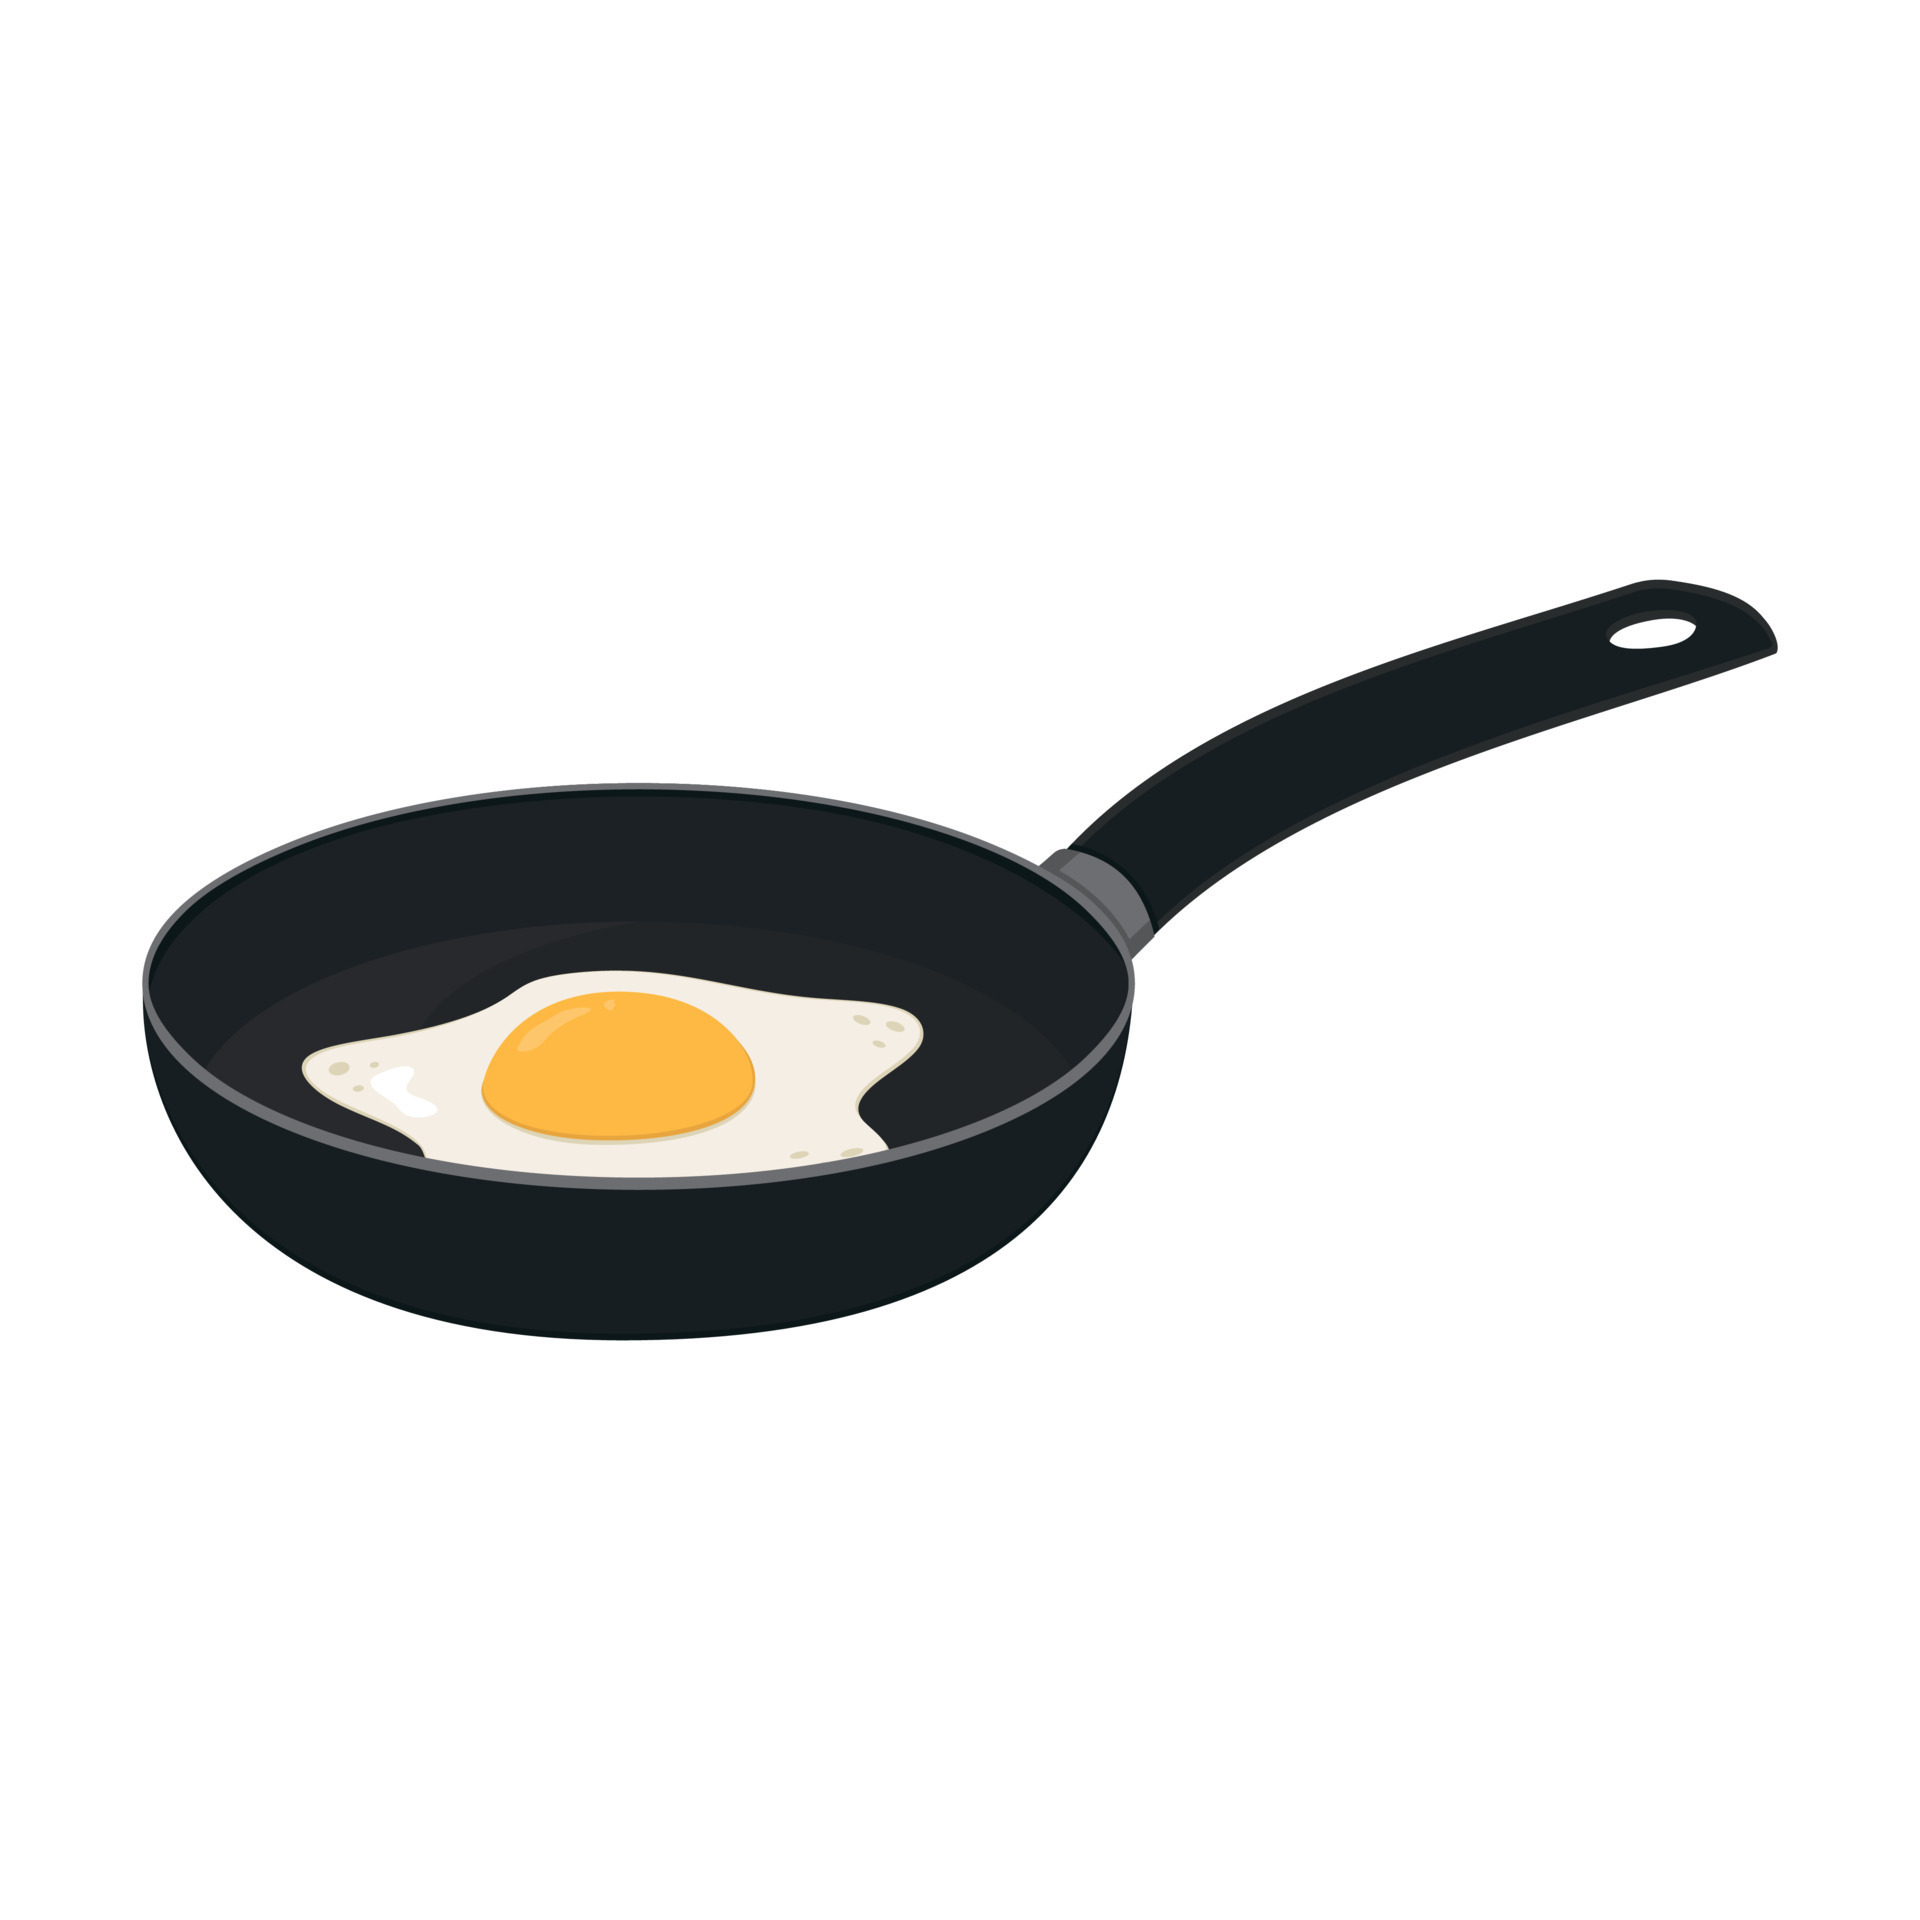 Fried egg in pan clipart design illustration 9342145 PNG